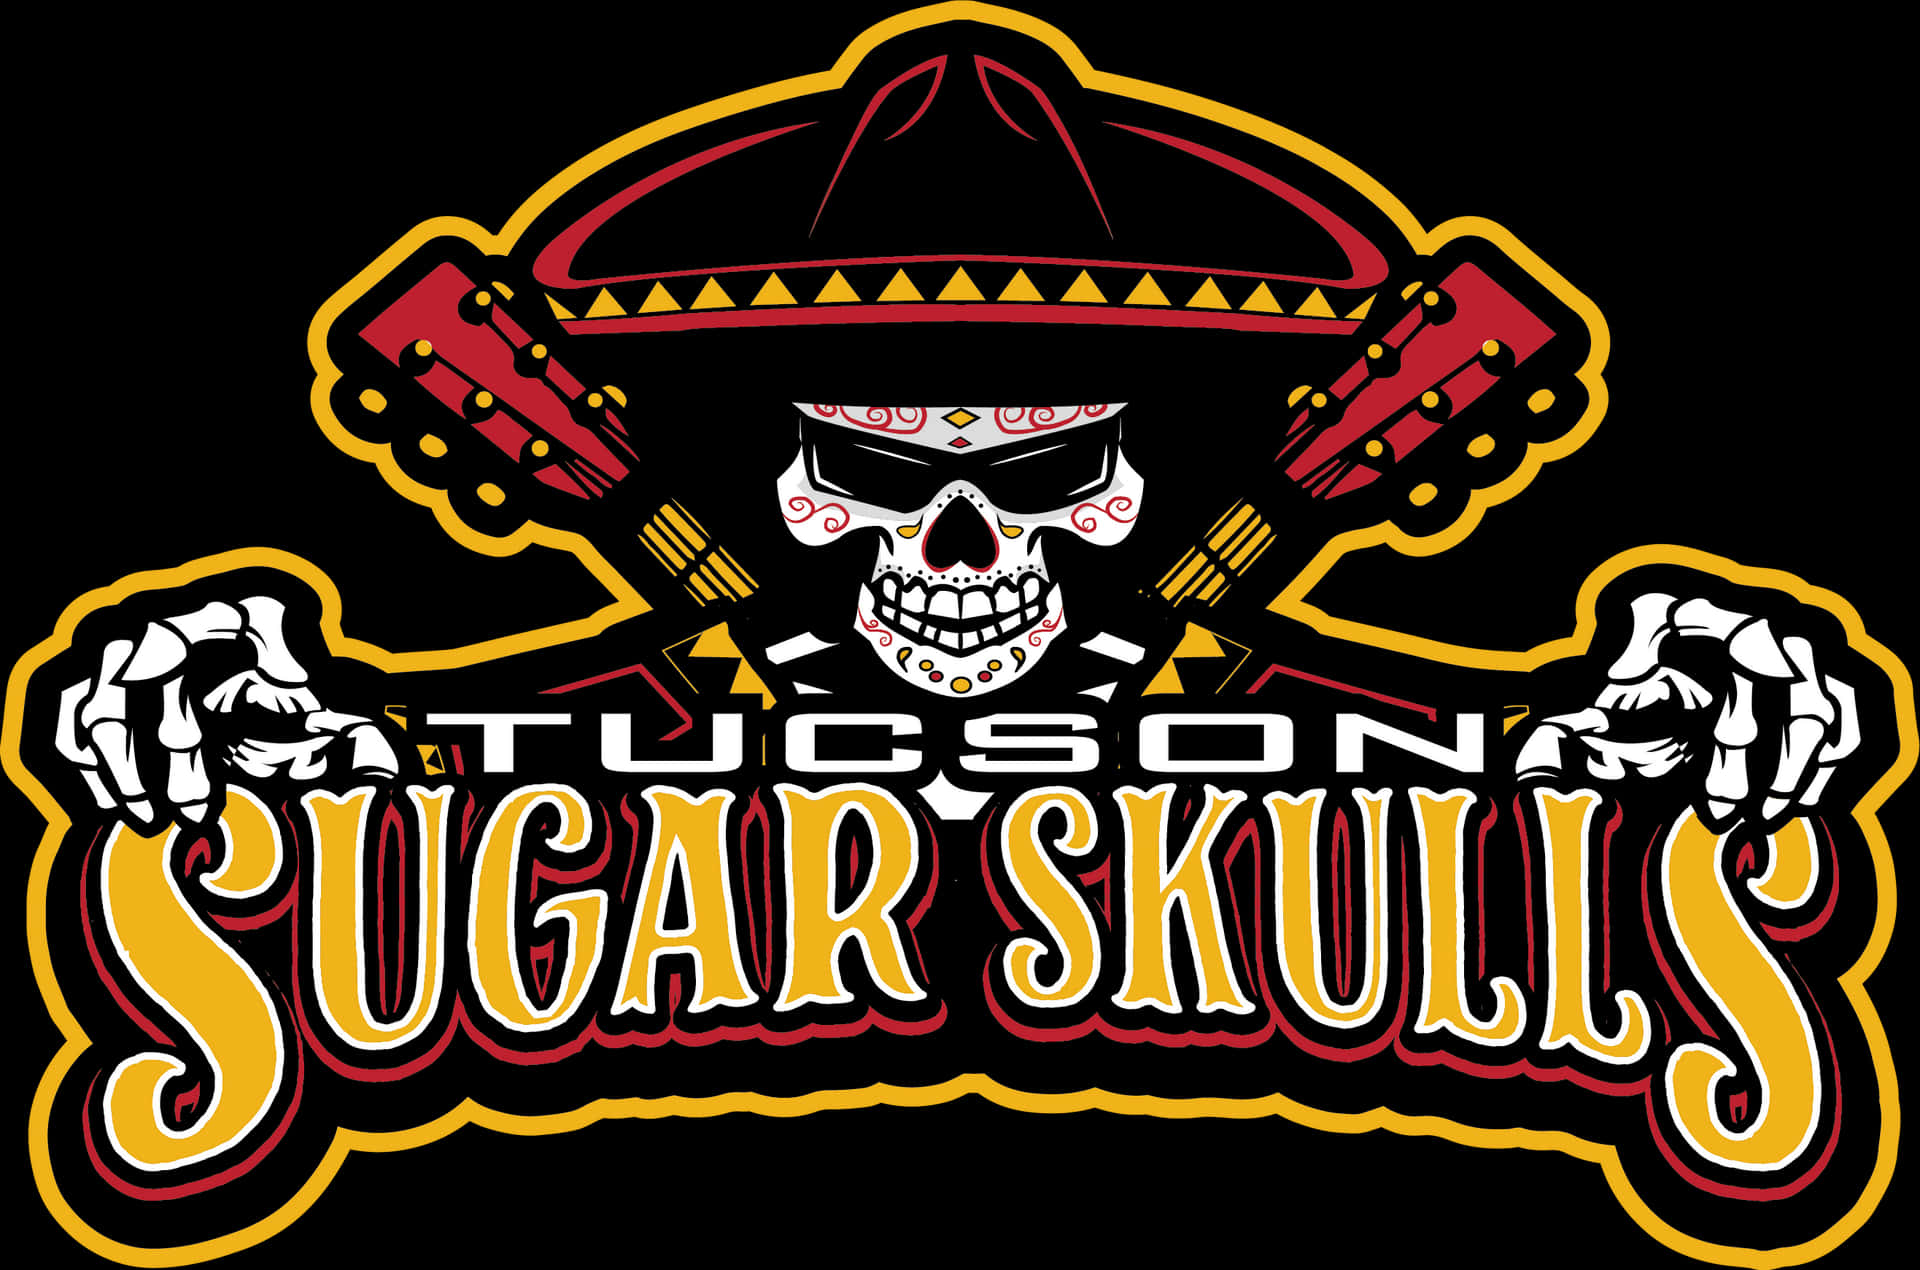 Tucson Sugar Skulls Logo PNG image